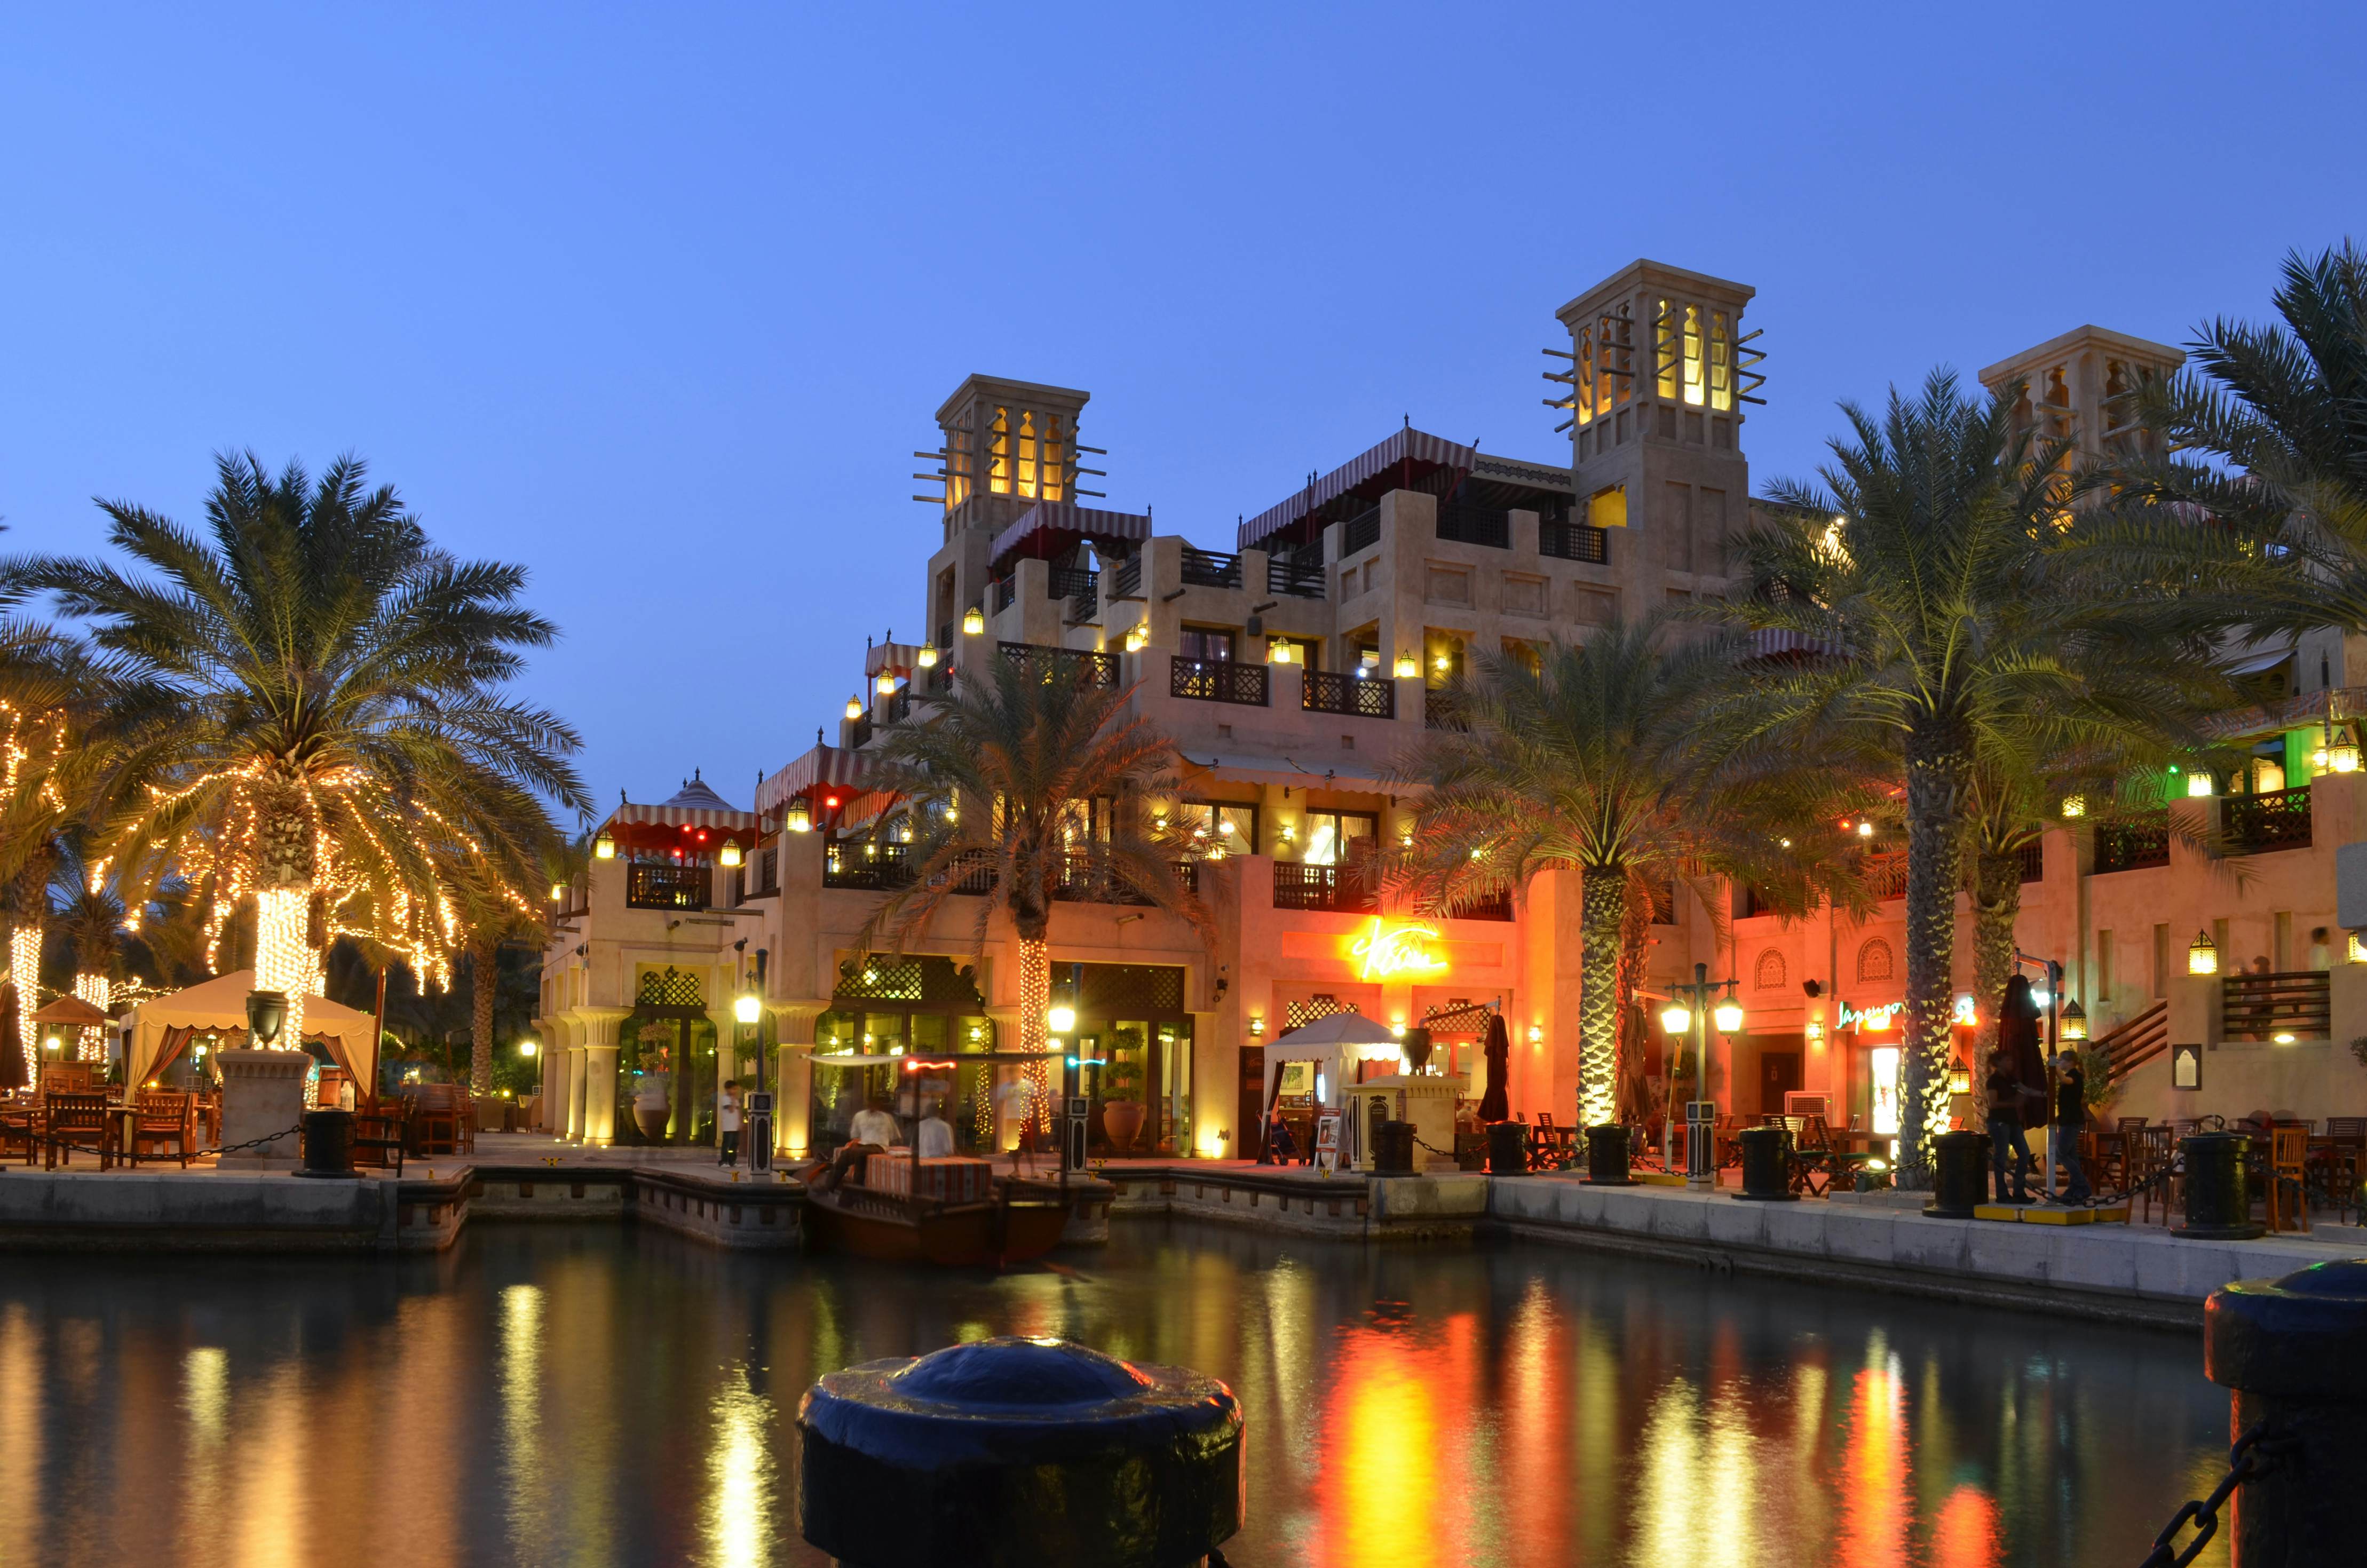 Gold Souq | Deira, Dubai | Attractions - Lonely Planet